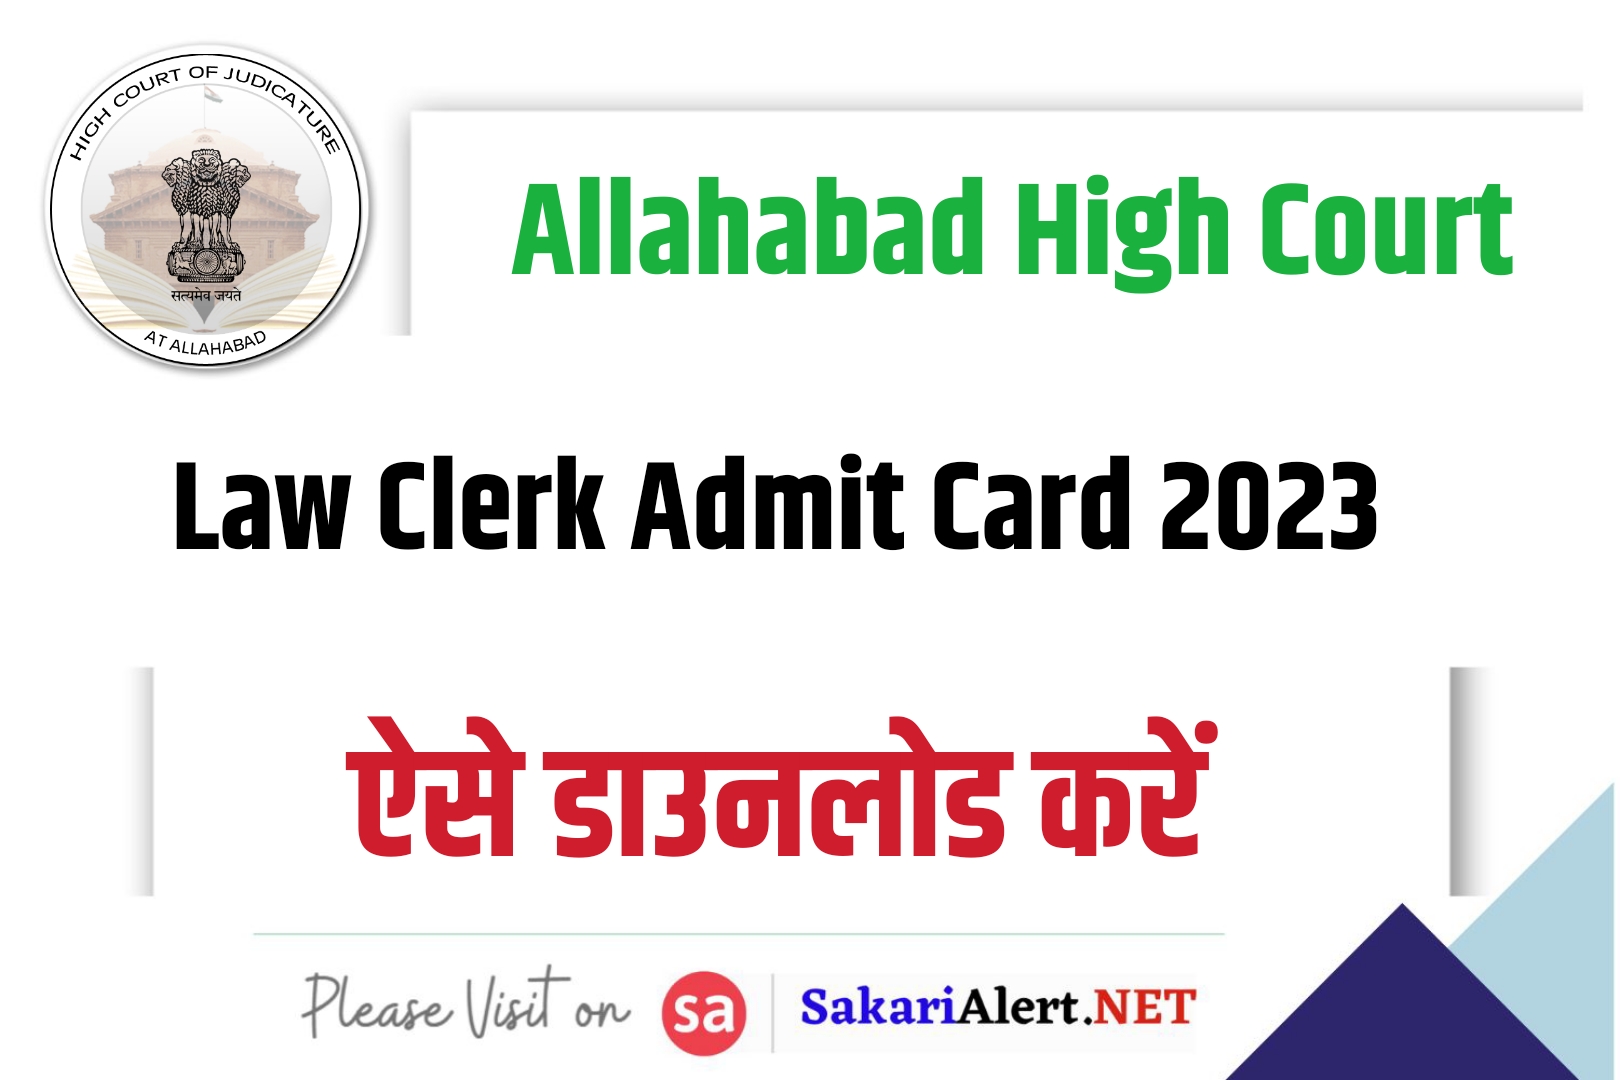 Allahabad High Court Law Clerk Admit Card 2023